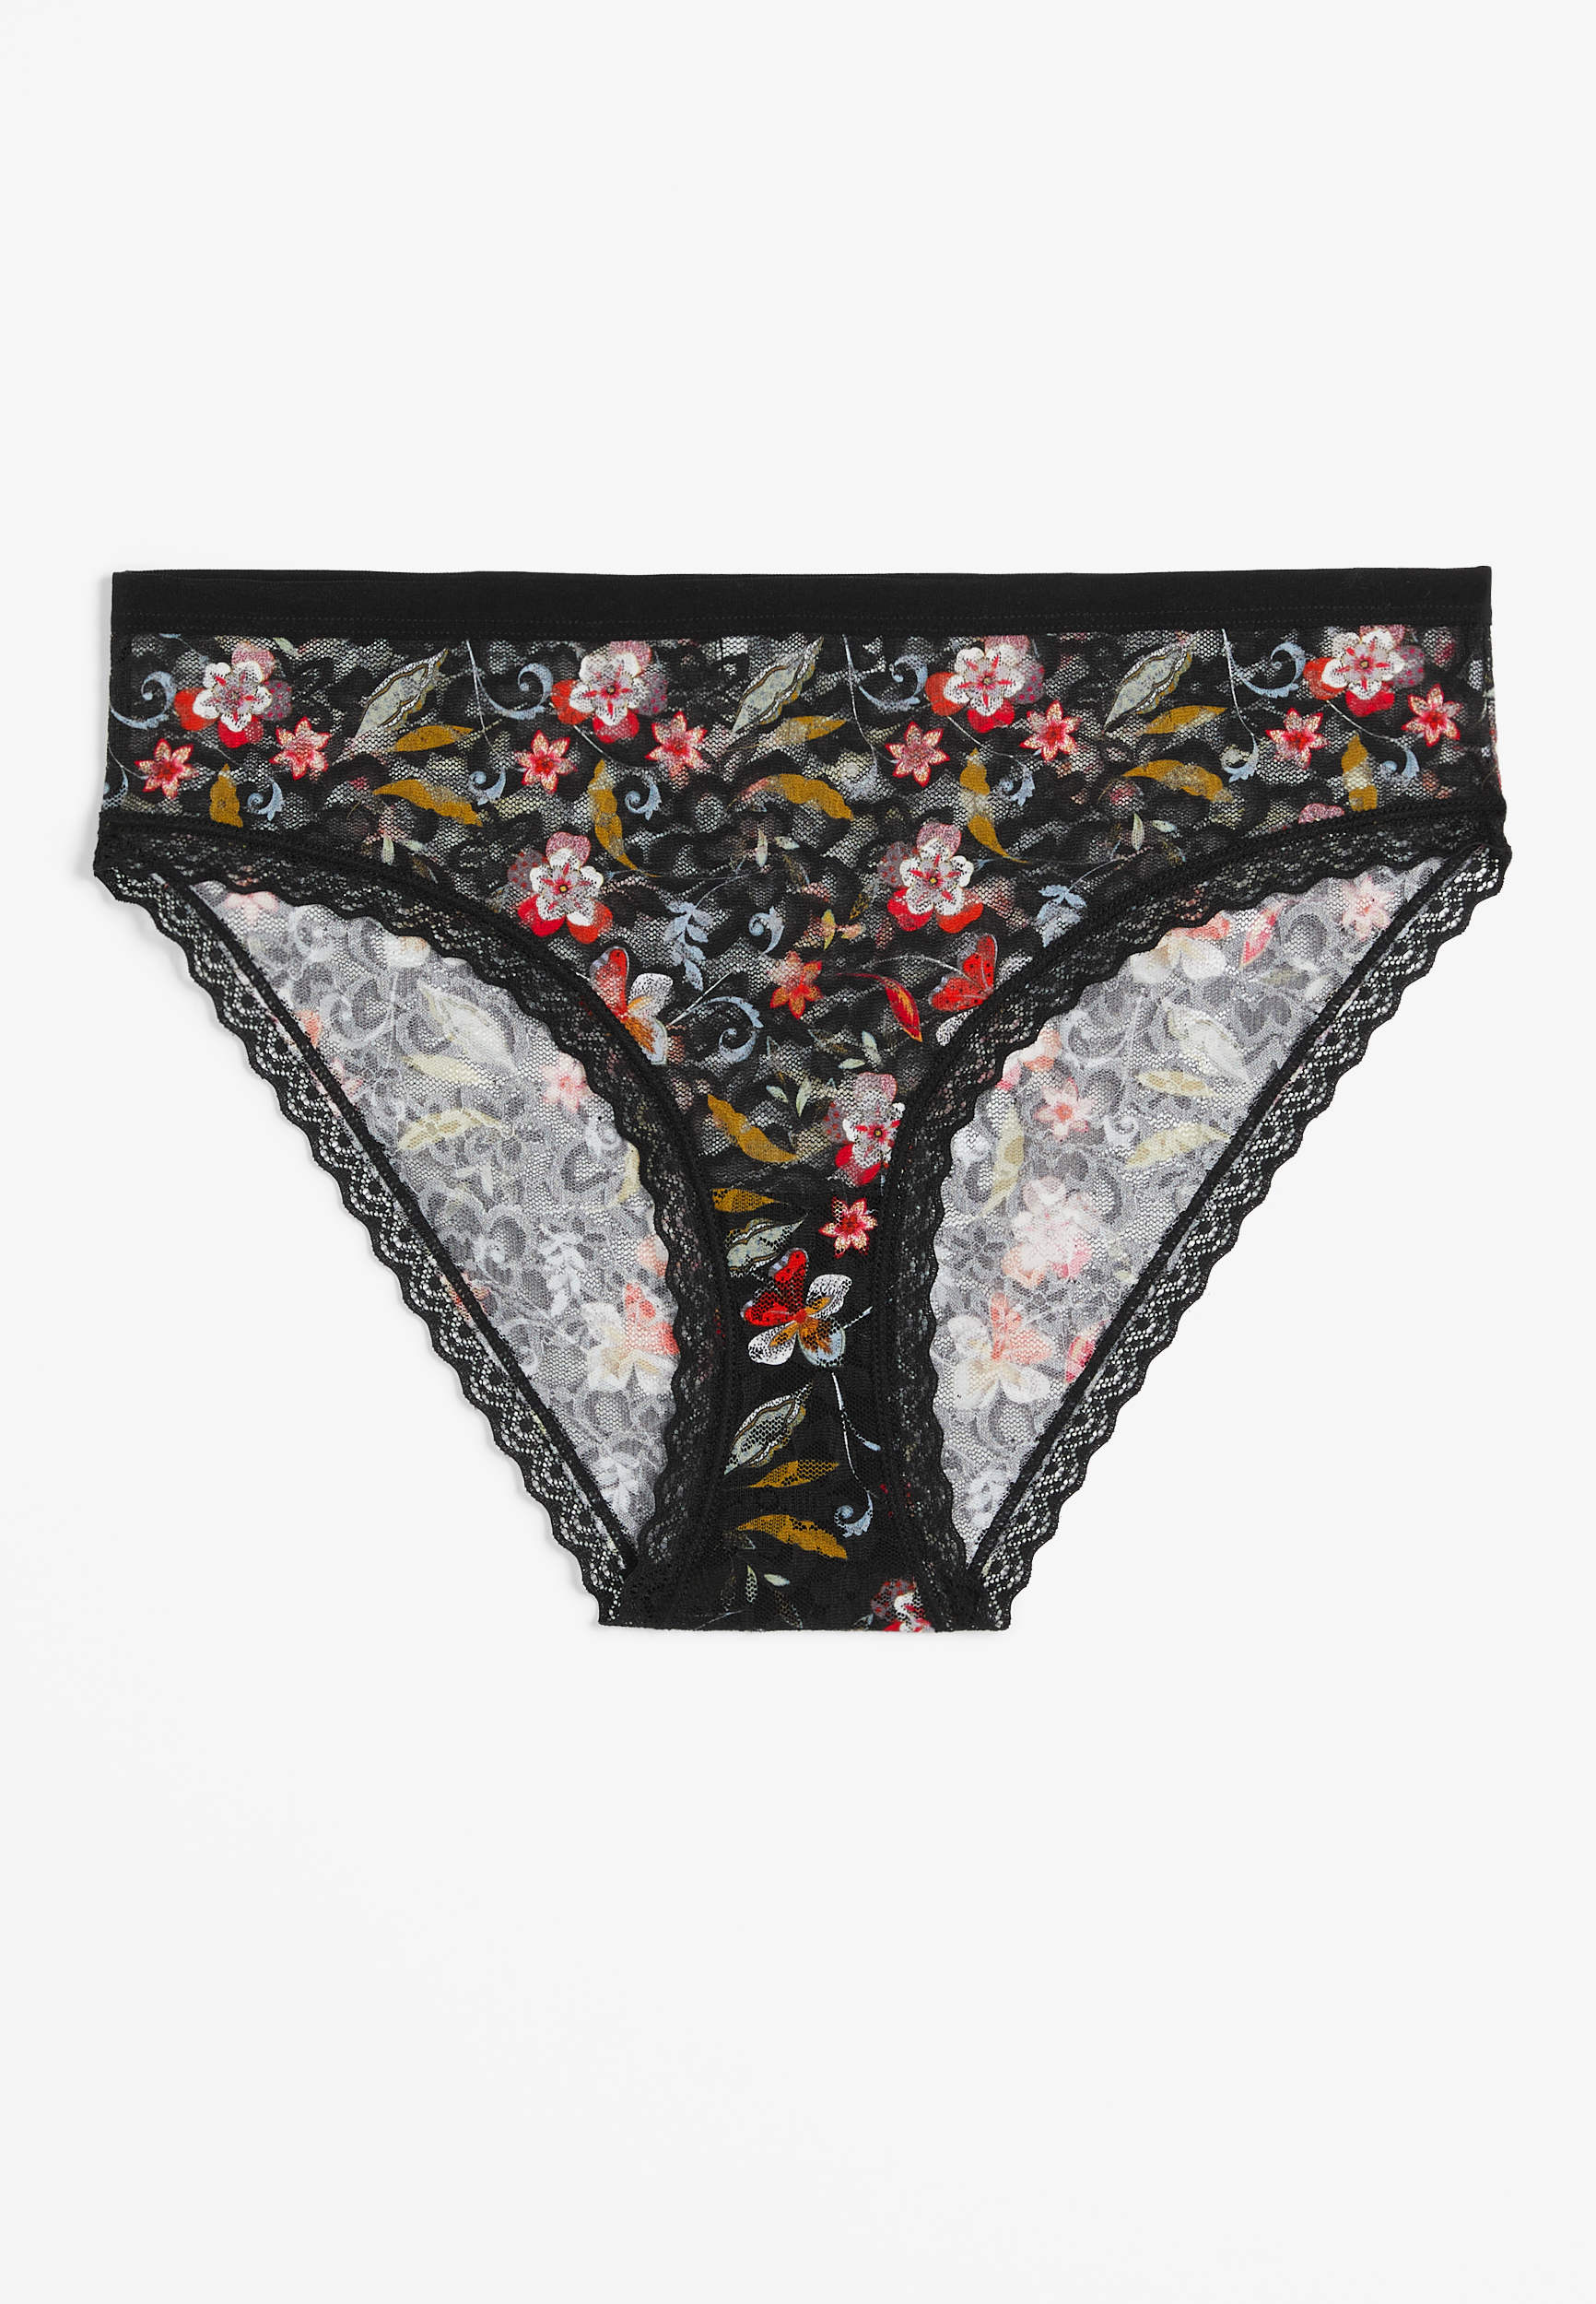 Vintage Lace Black Floral Bikini Panty | maurices